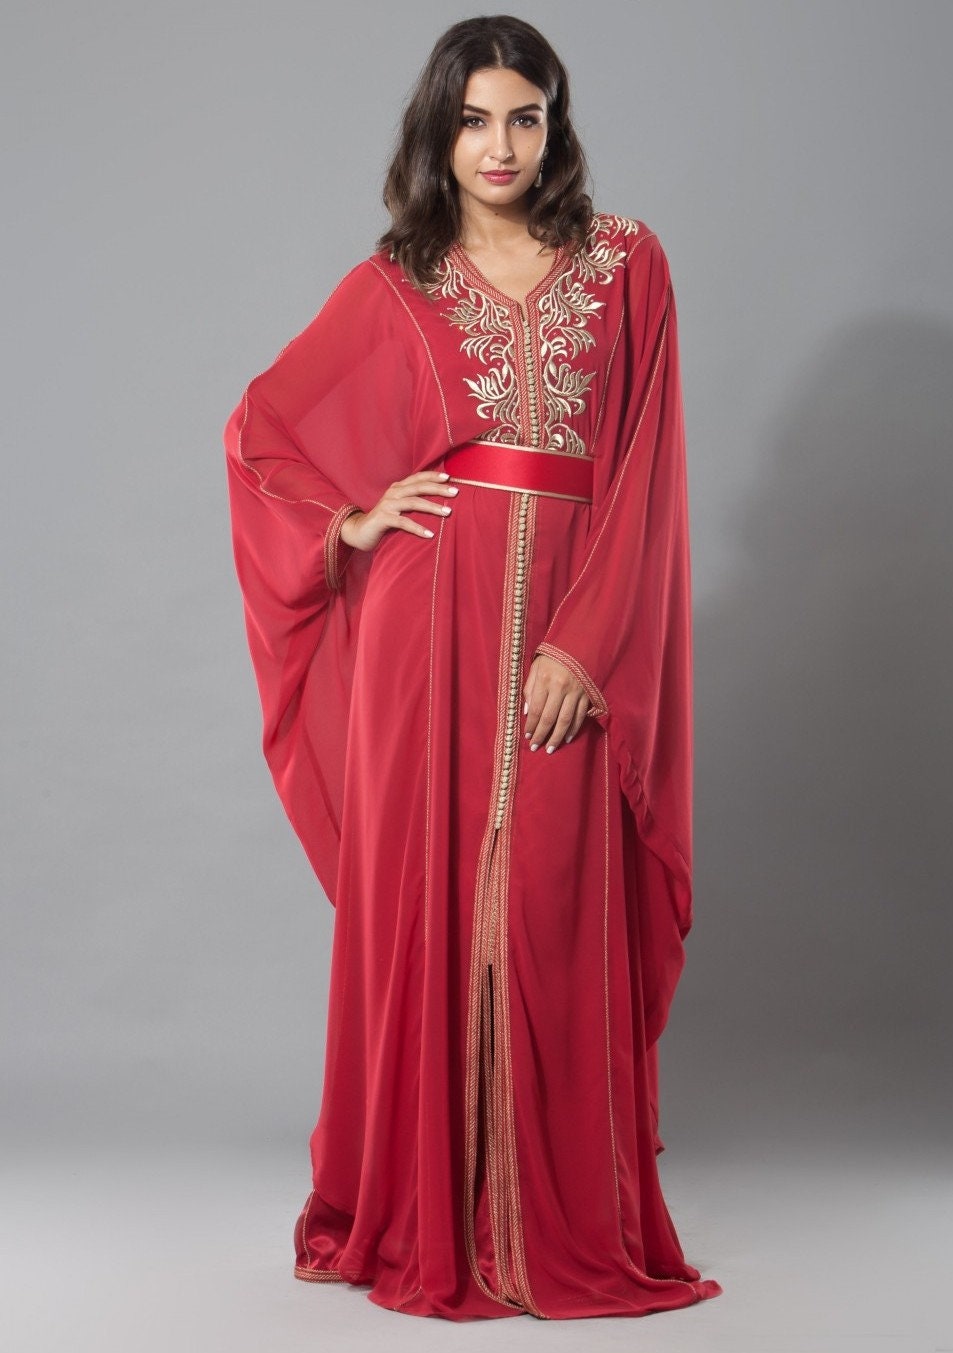 Moroccan Red Gandoura traditional dress elegant moroccan | Etsy